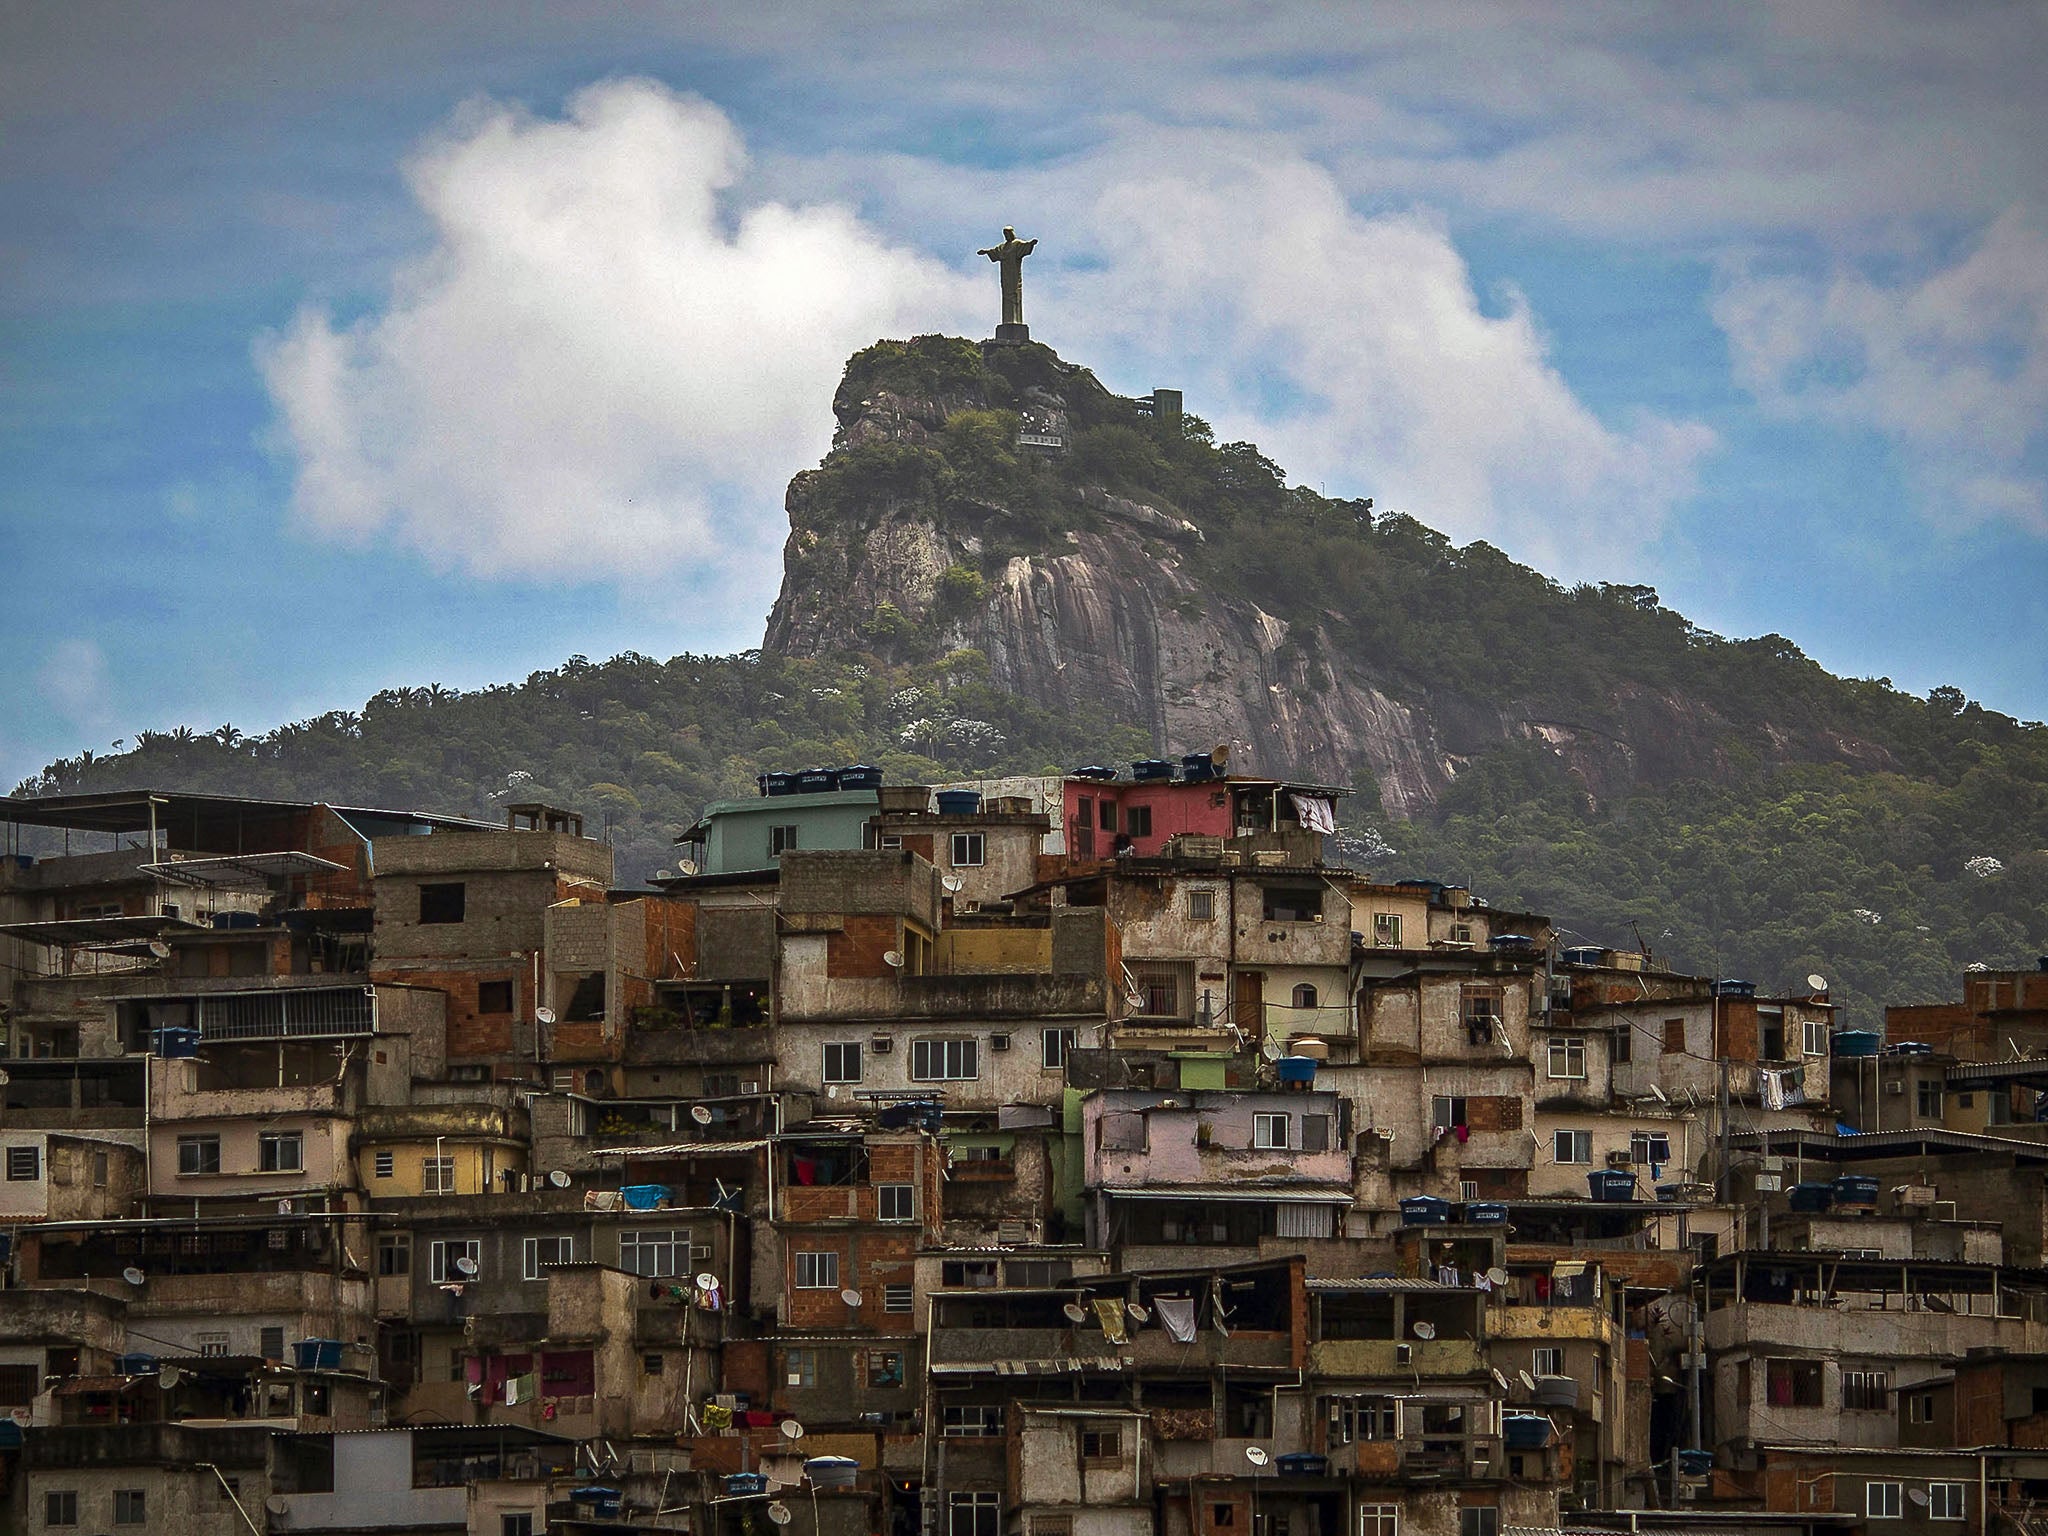 Even the poor can no longer afford the favelas of Rio de Janeiro